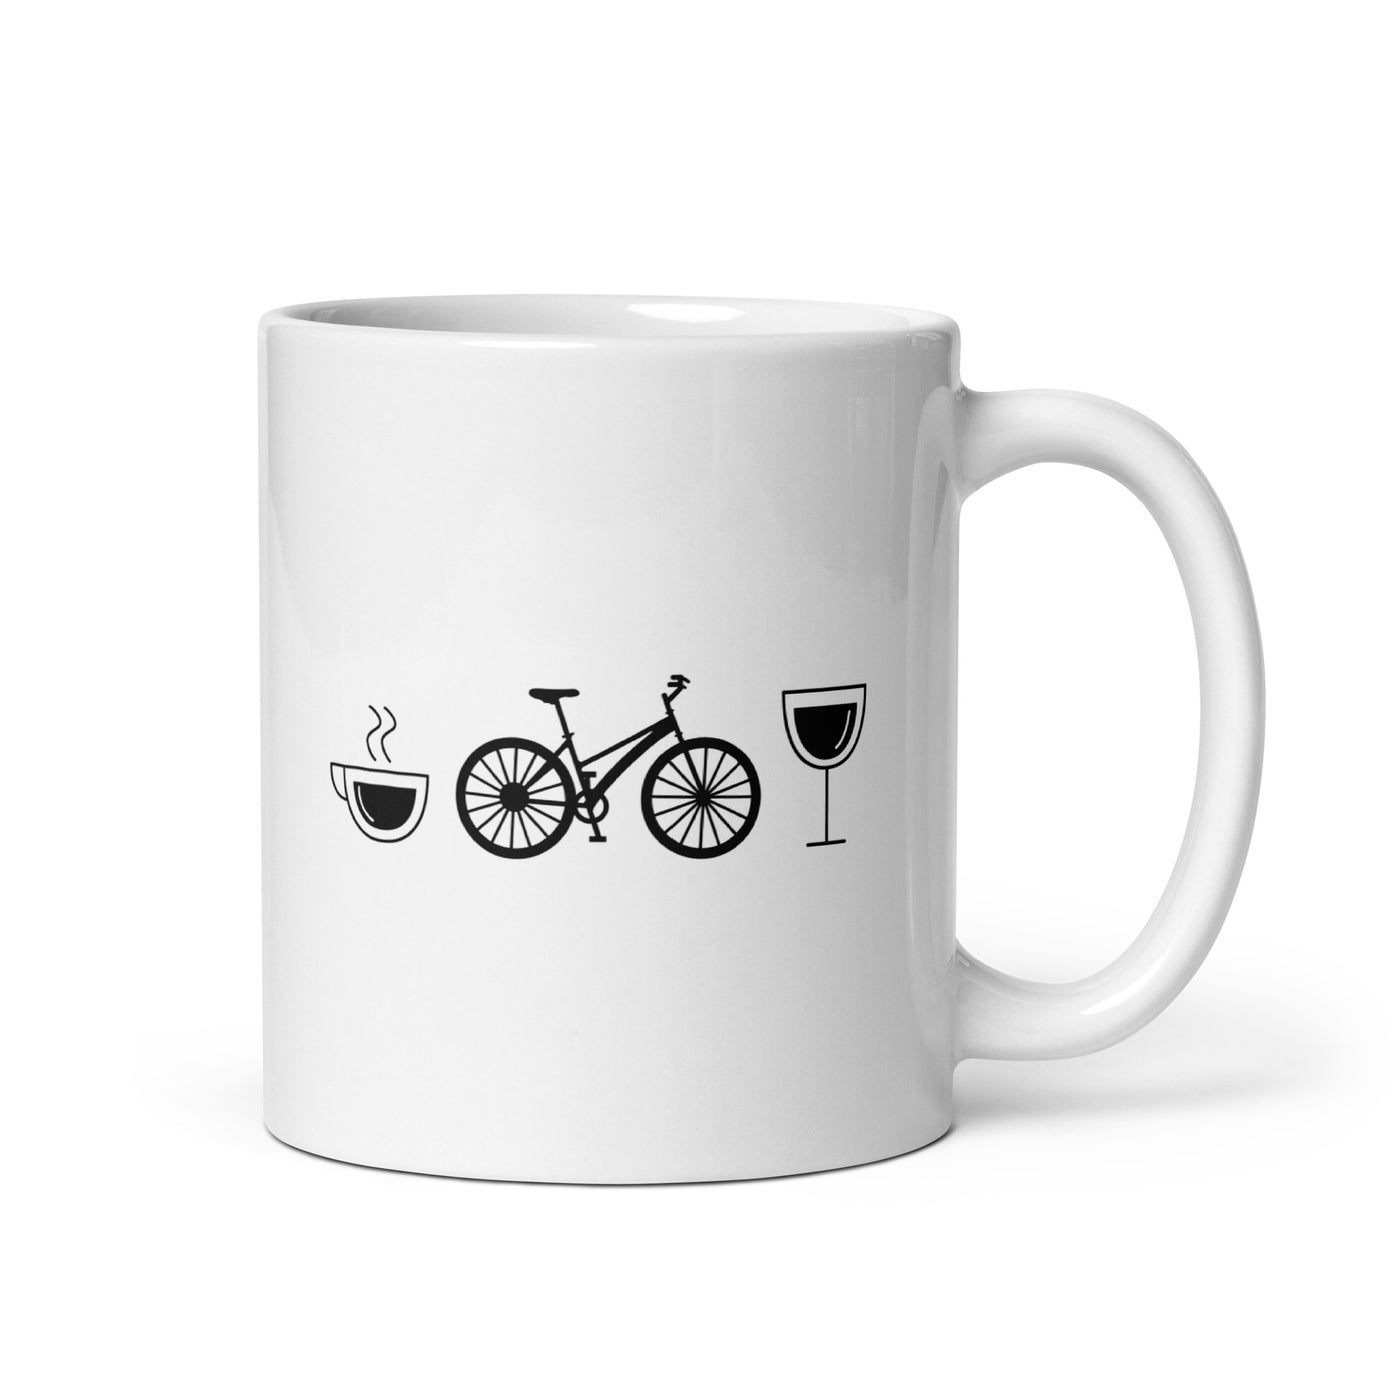 Coffee Wine And Bicycle - Tasse fahrrad